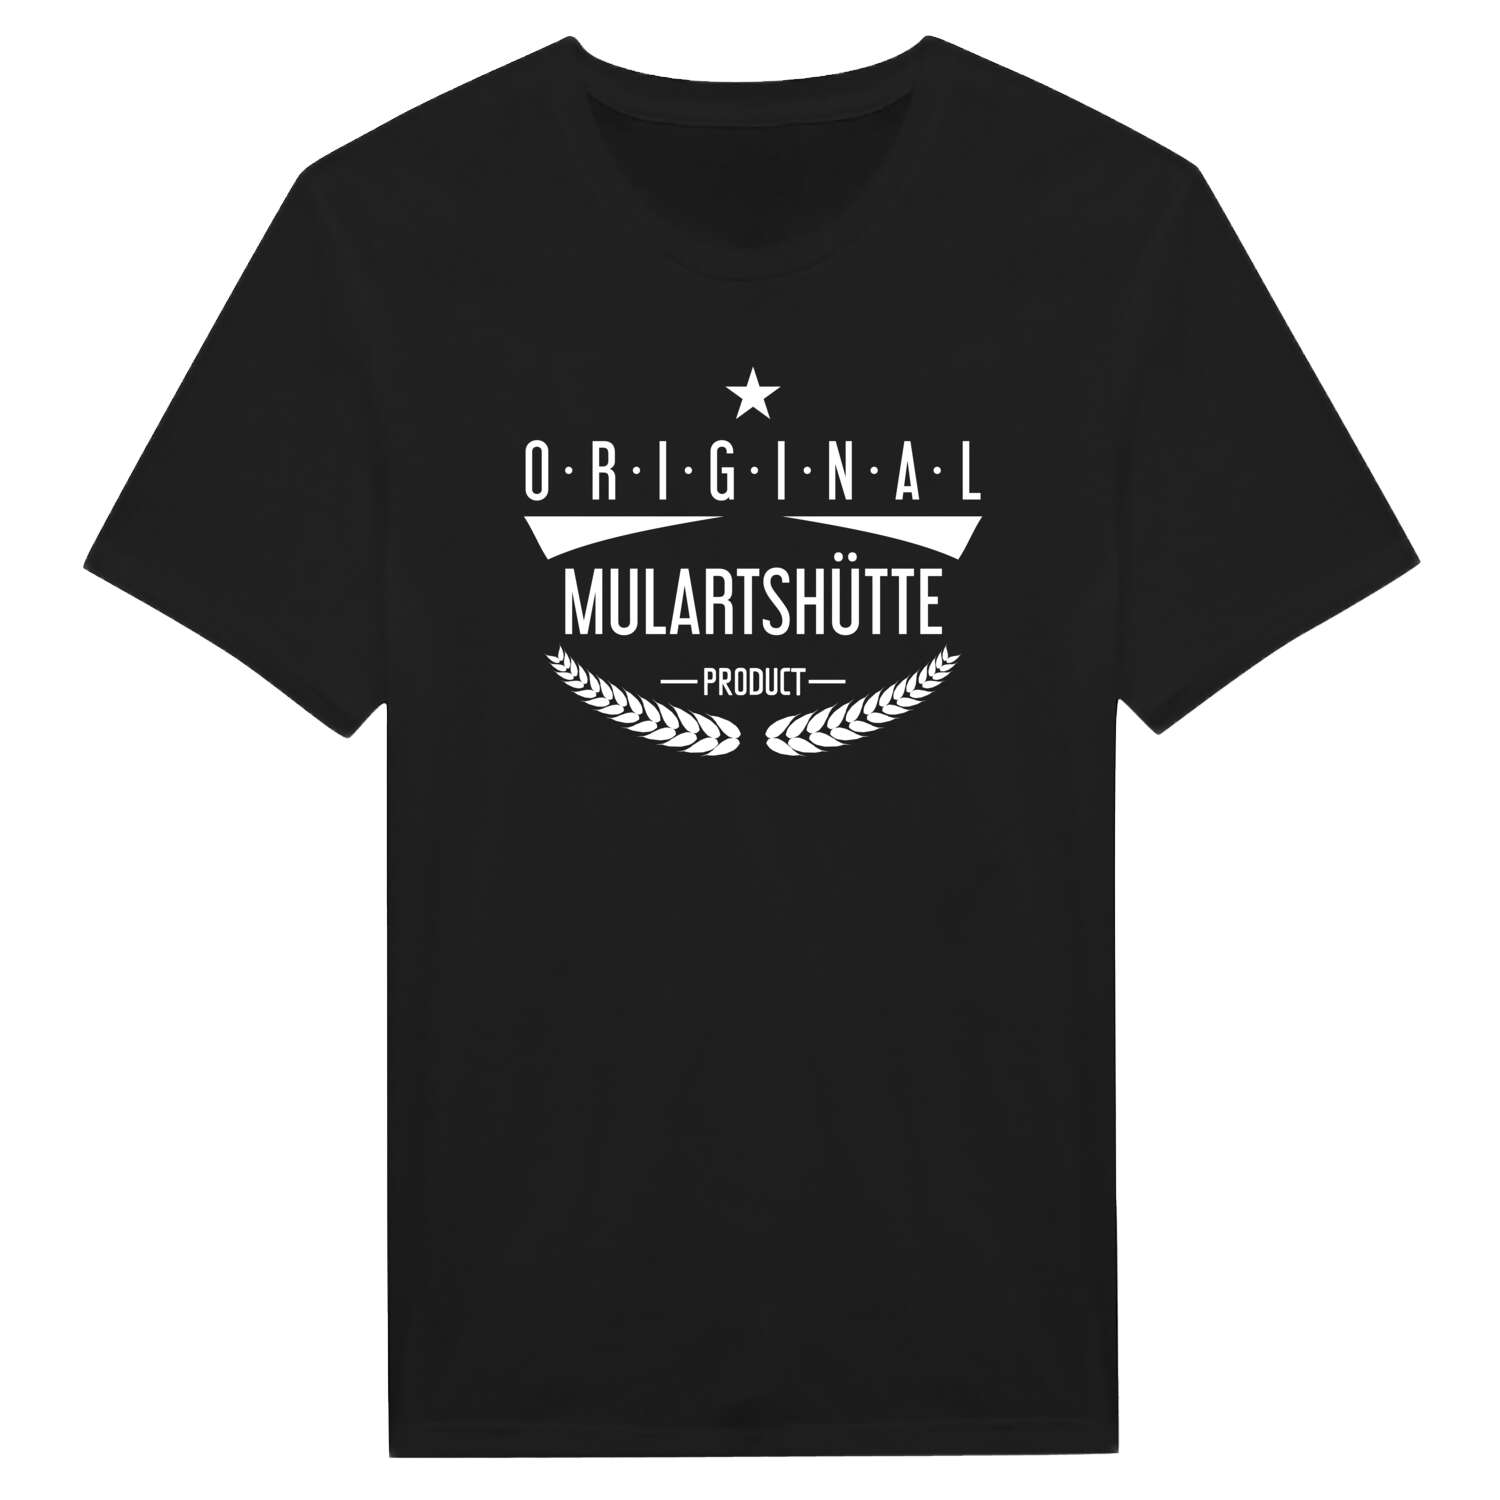 Mulartshütte T-Shirt »Original Product«